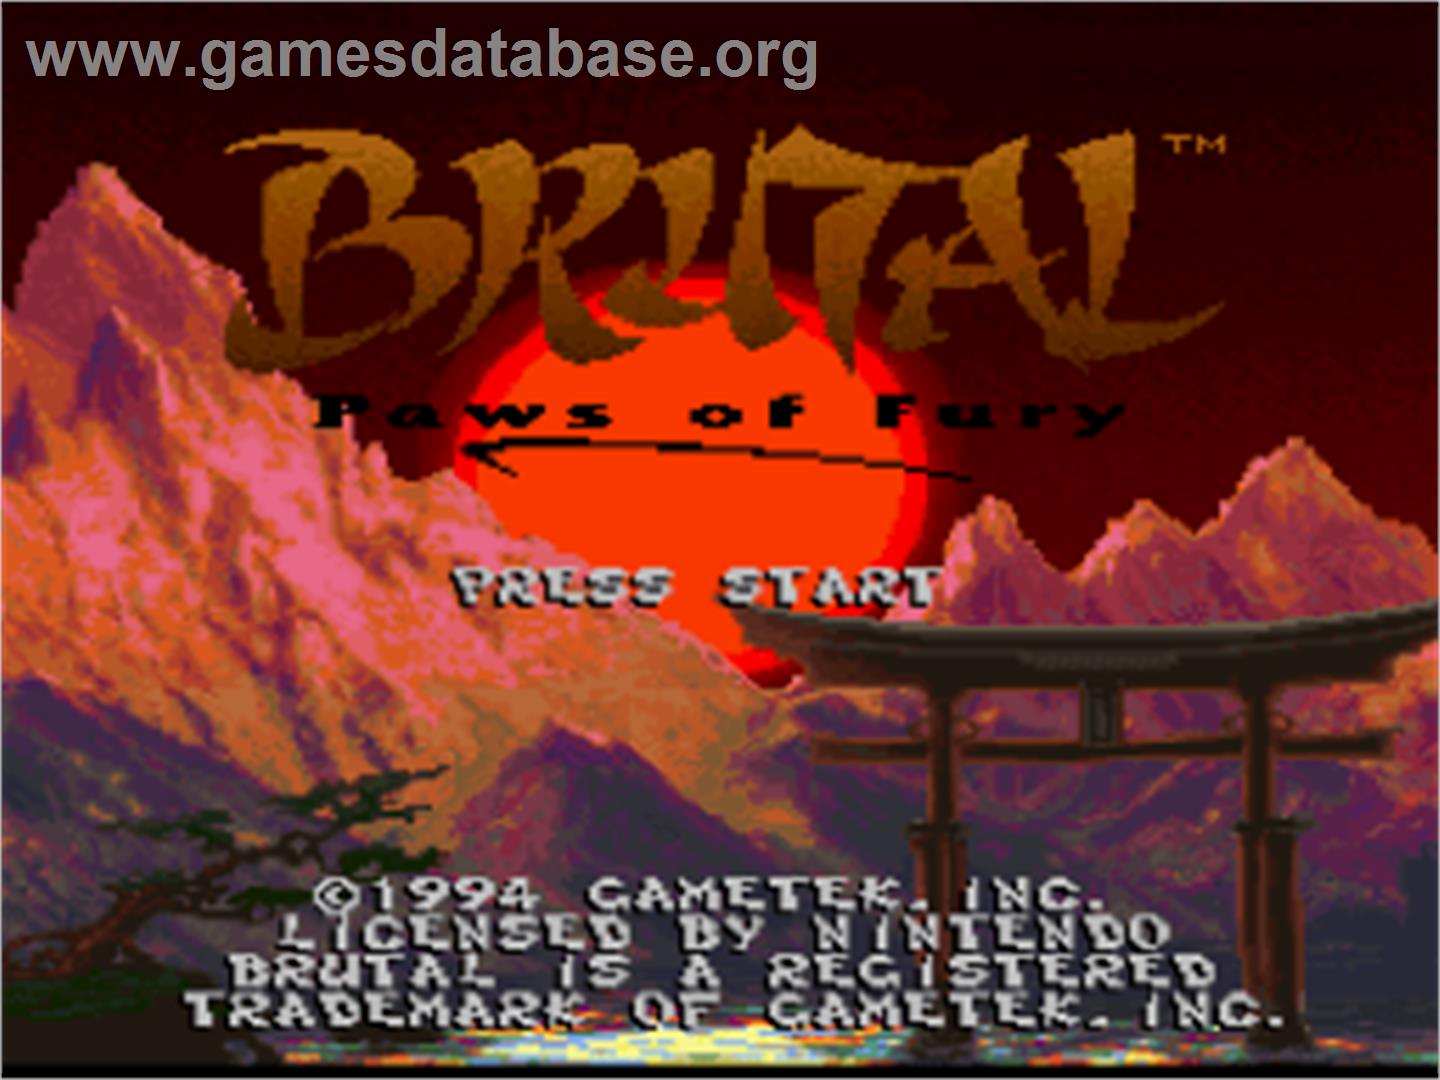 Brutal: Paws of Fury - Nintendo SNES - Artwork - Title Screen